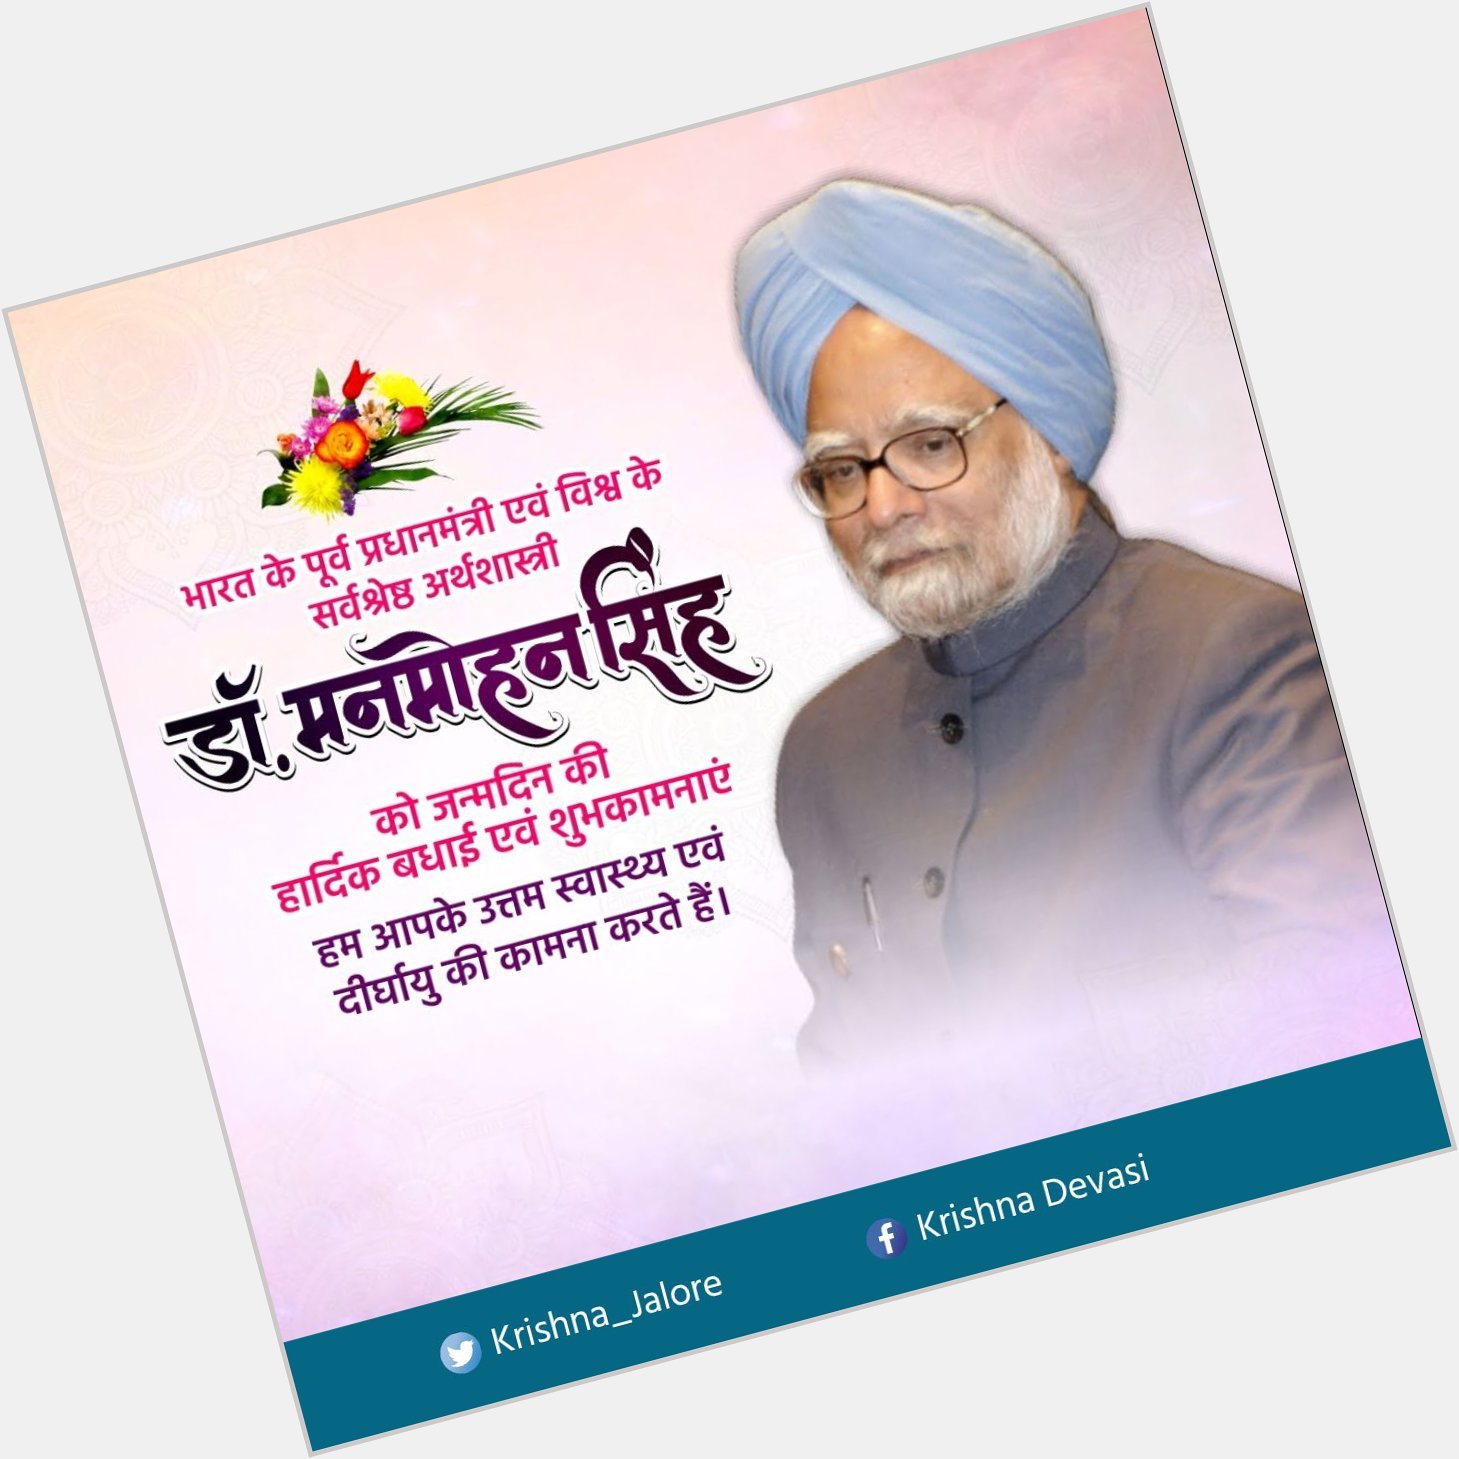 Happy birthday wishes boss Dr Manmohan Singh ji 